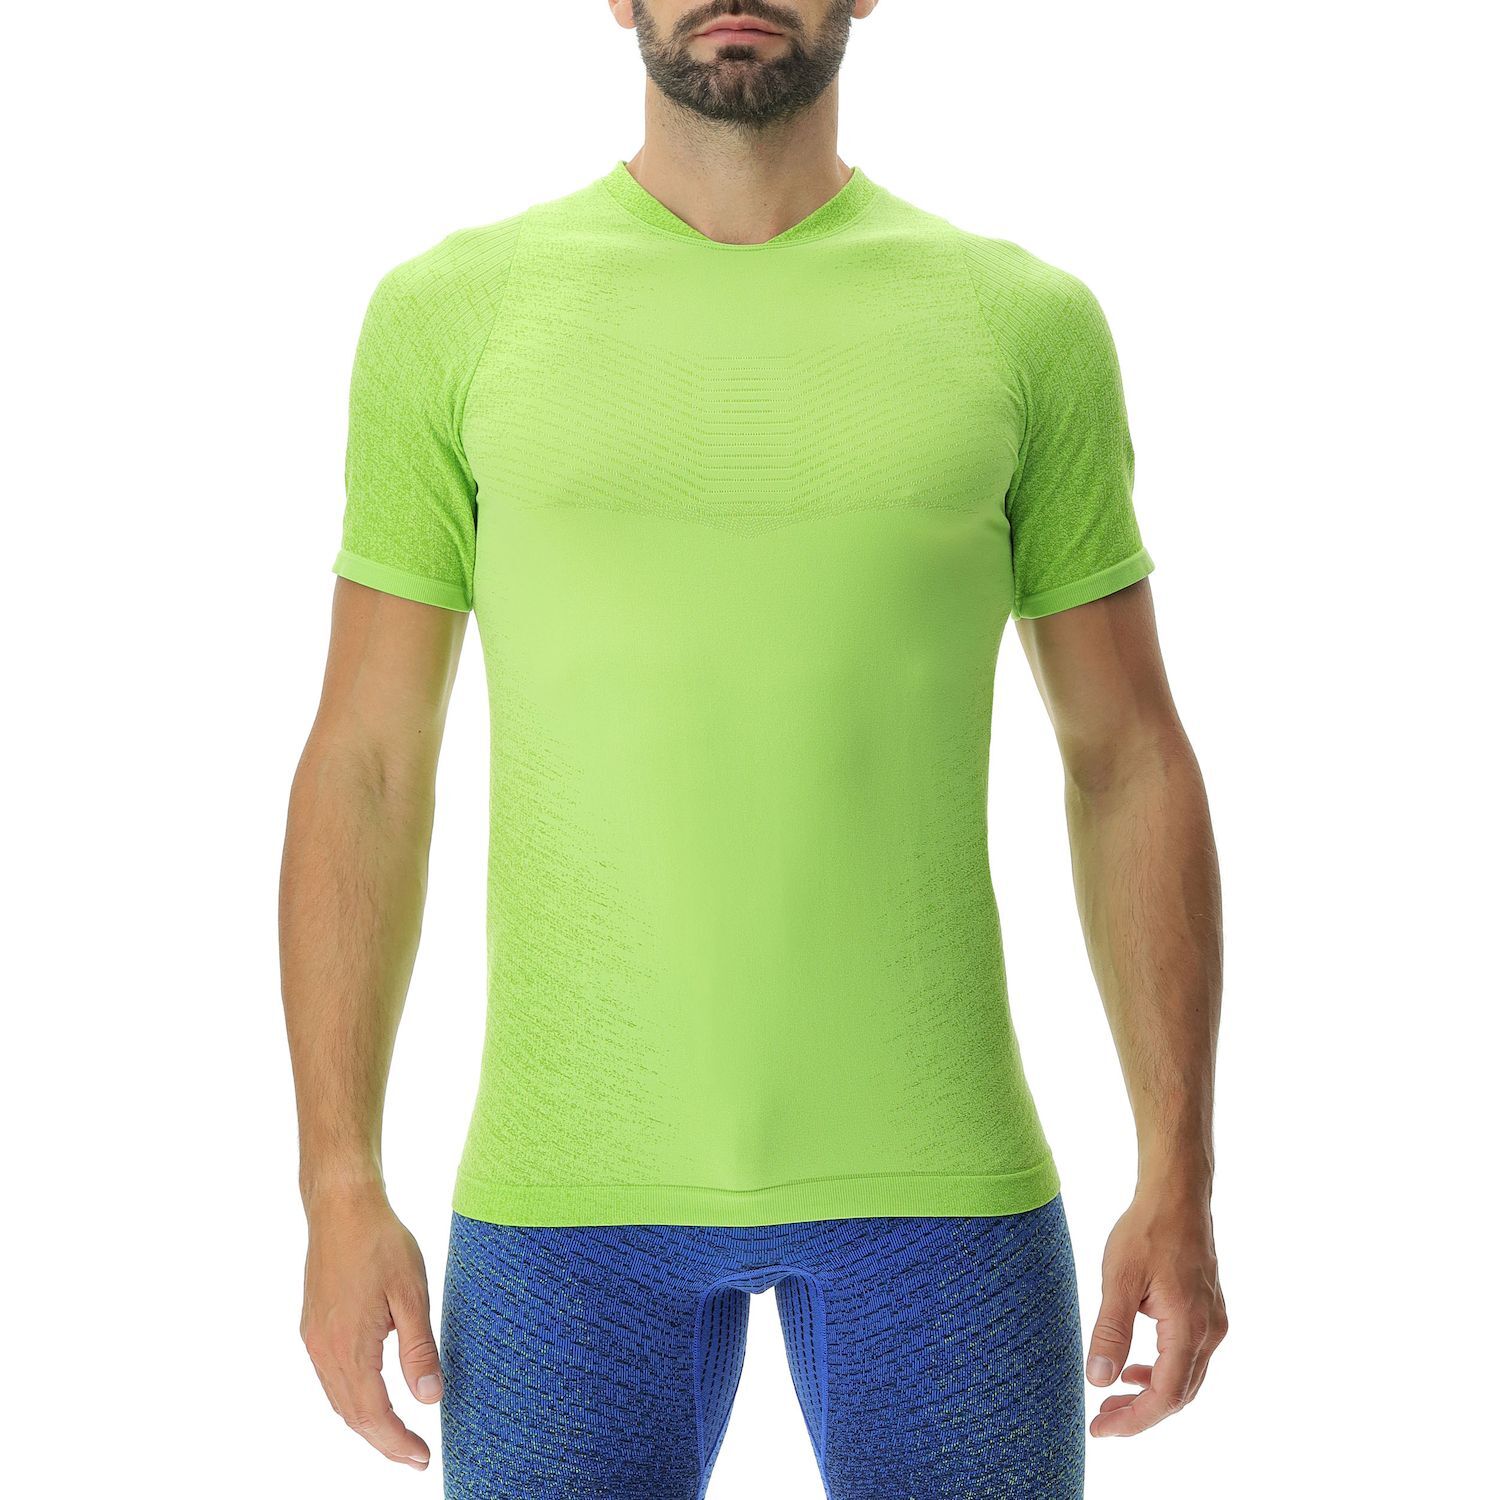 Uyn Running Exceleration Ow Shirt - T-shirt homme | Hardloop